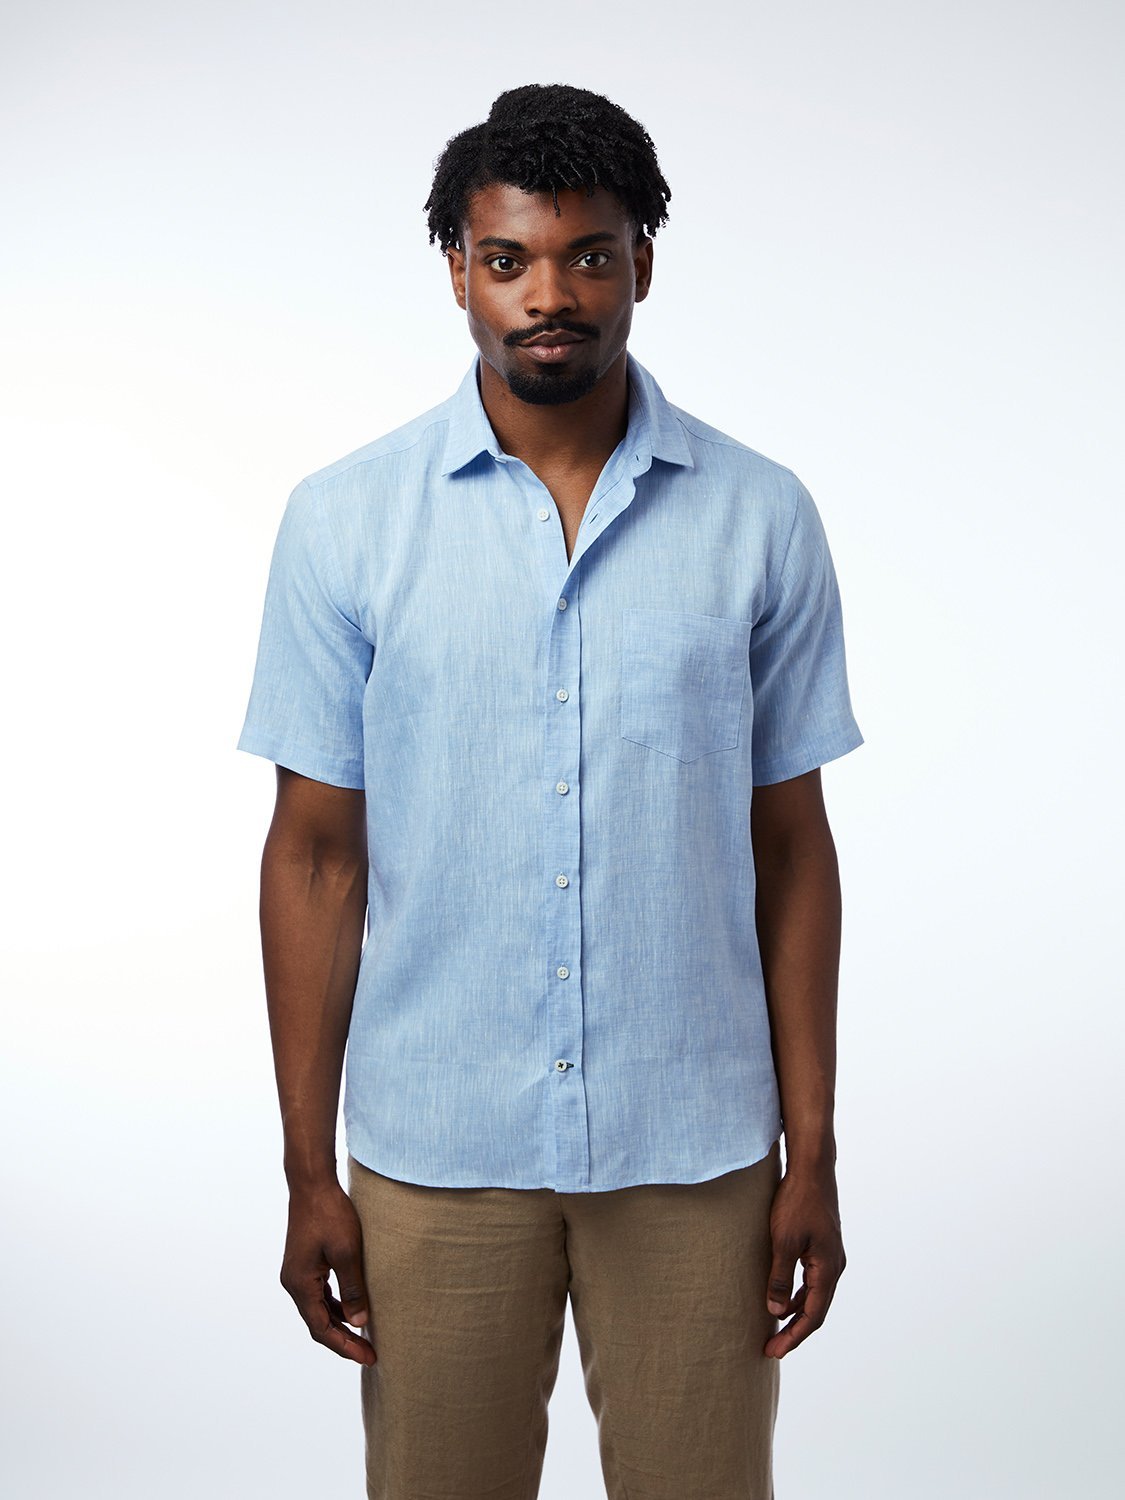 Sustainable Short Sleeve Linen Shirt Lido Light Blue - CARPASUS Online Store